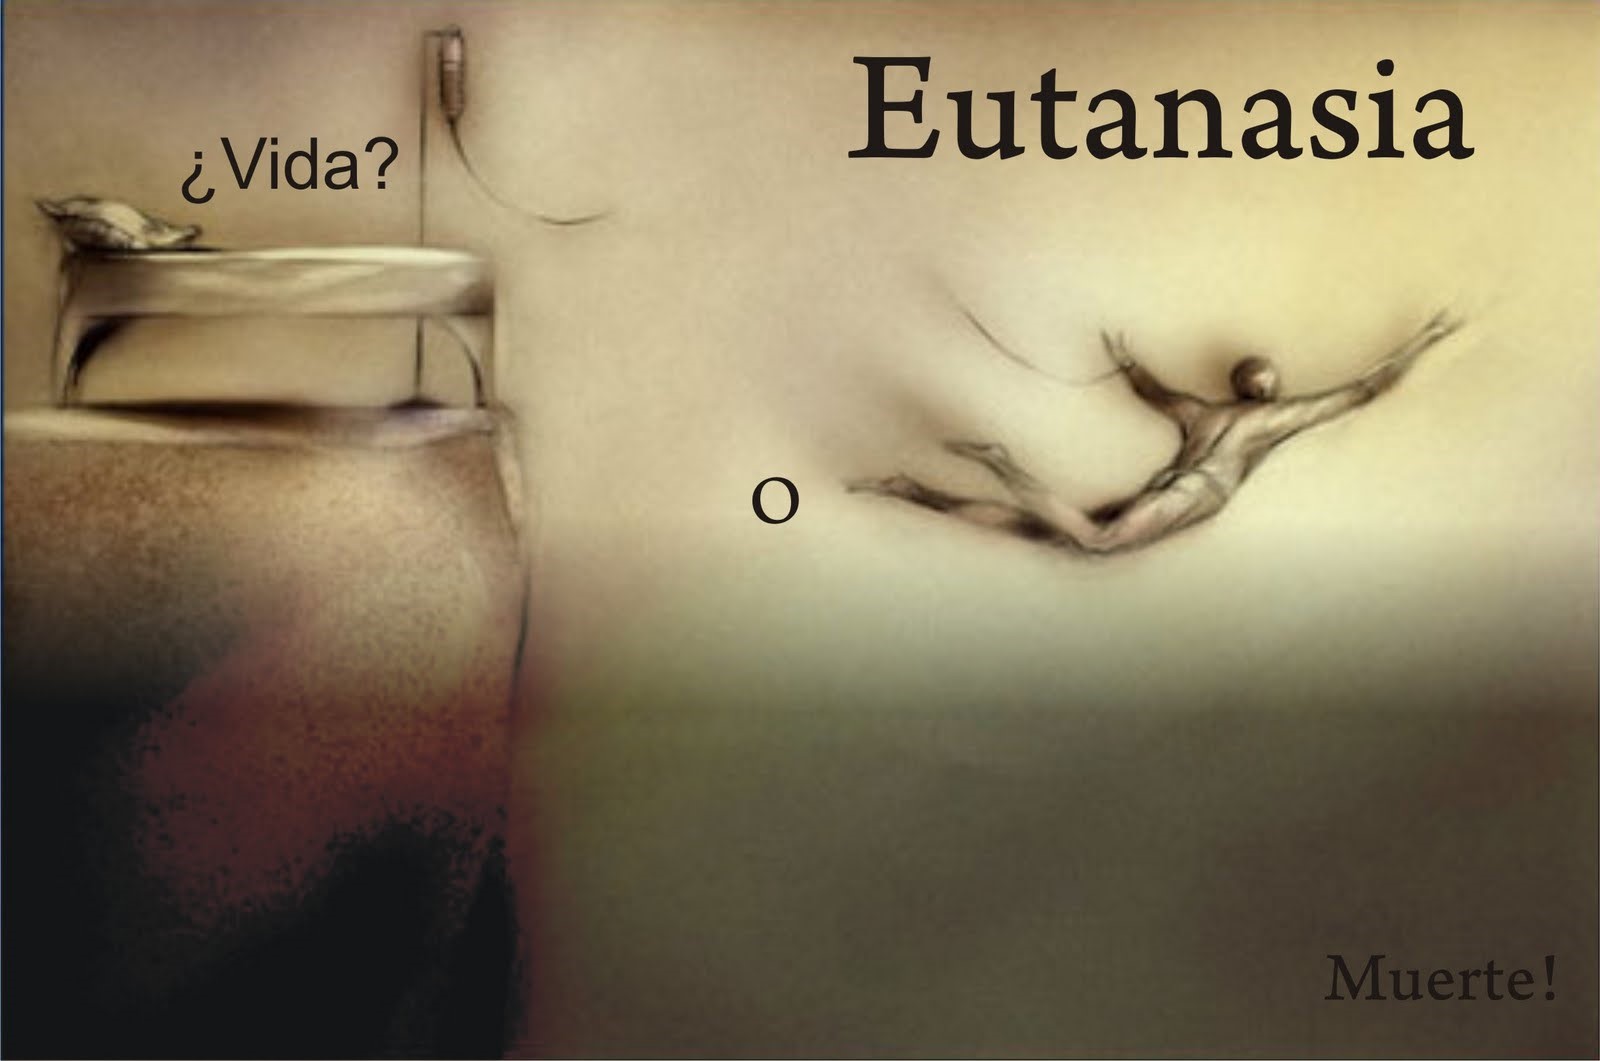 https://arquimedia.s3.amazonaws.com/64/imagenes/articulo-eutanasiajpg.jpg